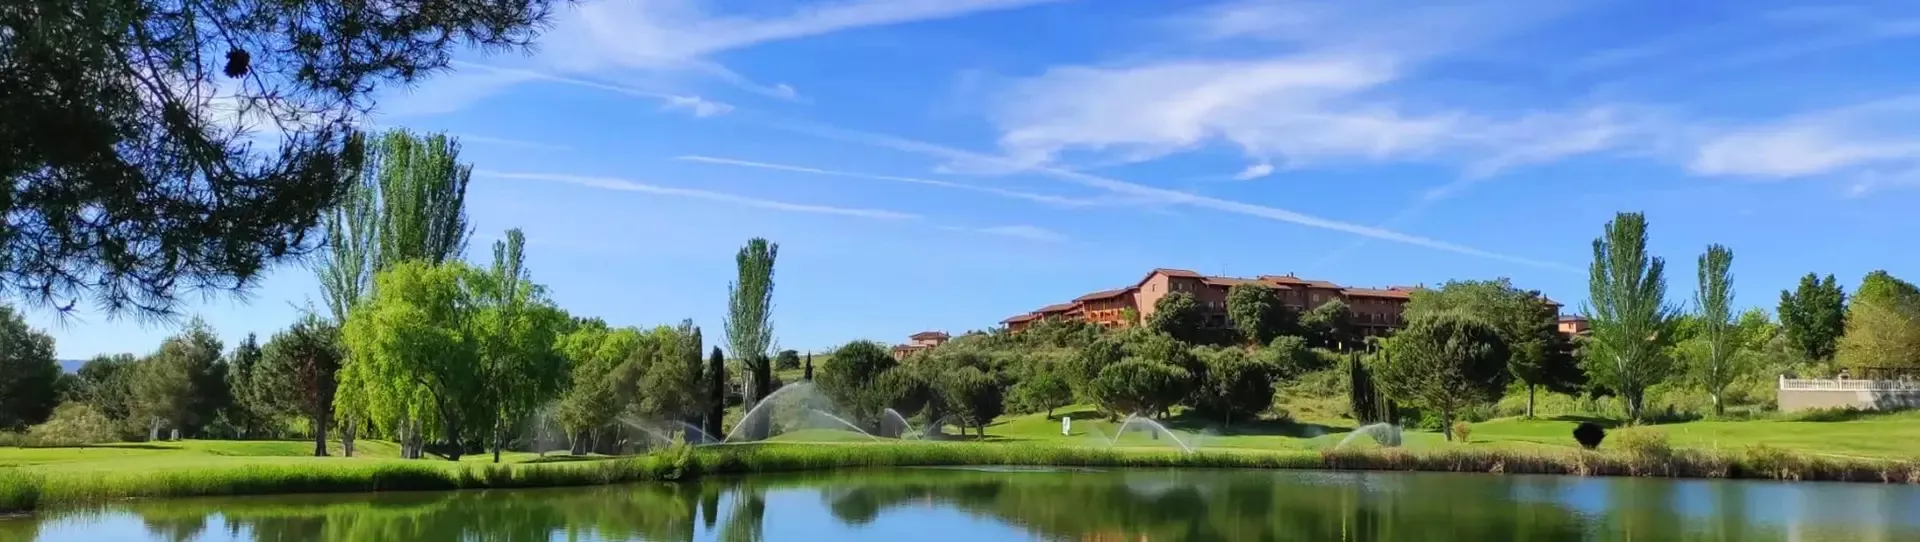 Spain golf courses - Cabanillas Guadalajara Golf Course - Photo 1